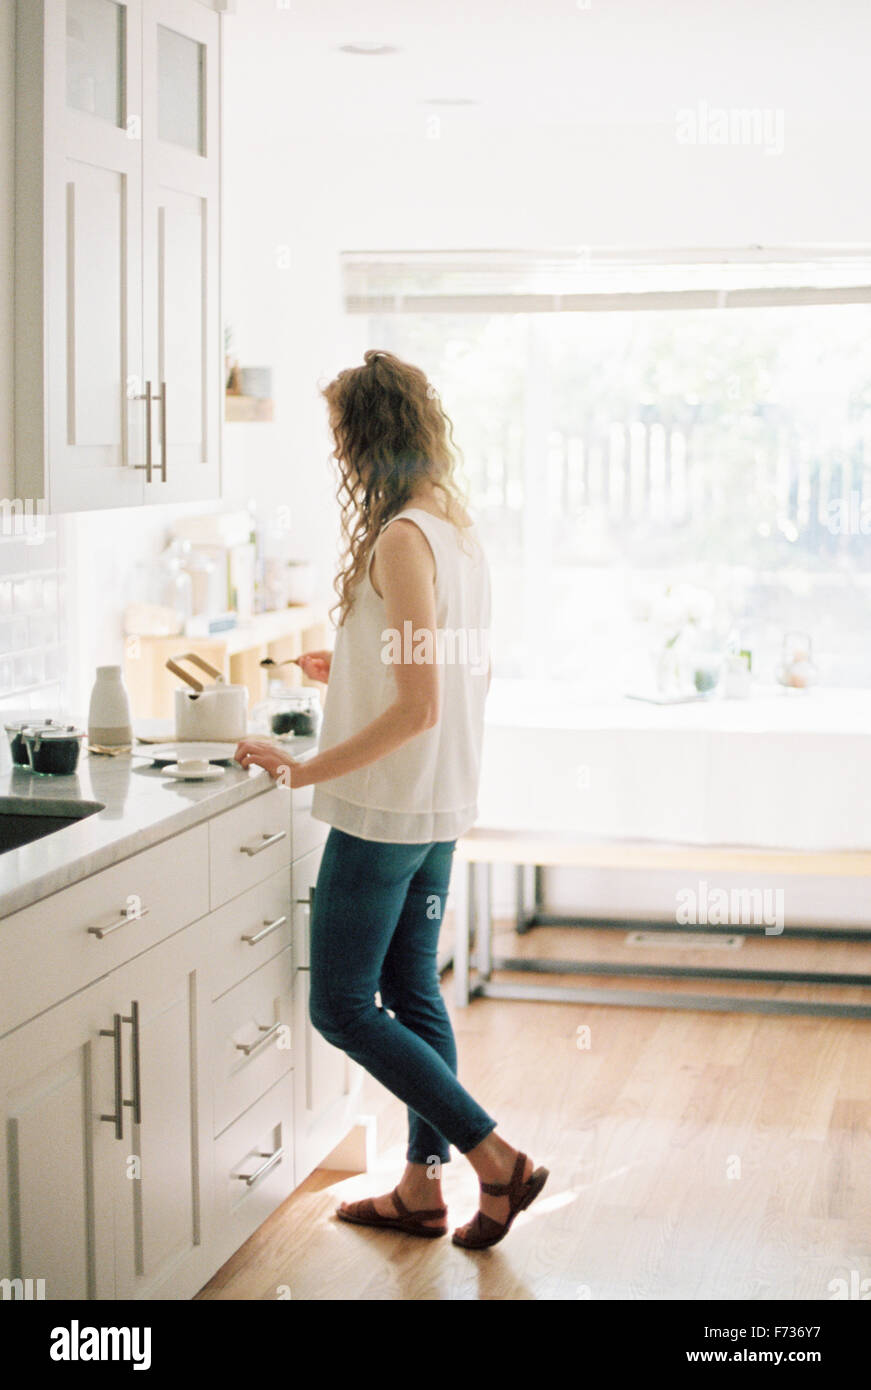 Donna in piedi in una cucina preparando una tazza di tè. Foto Stock